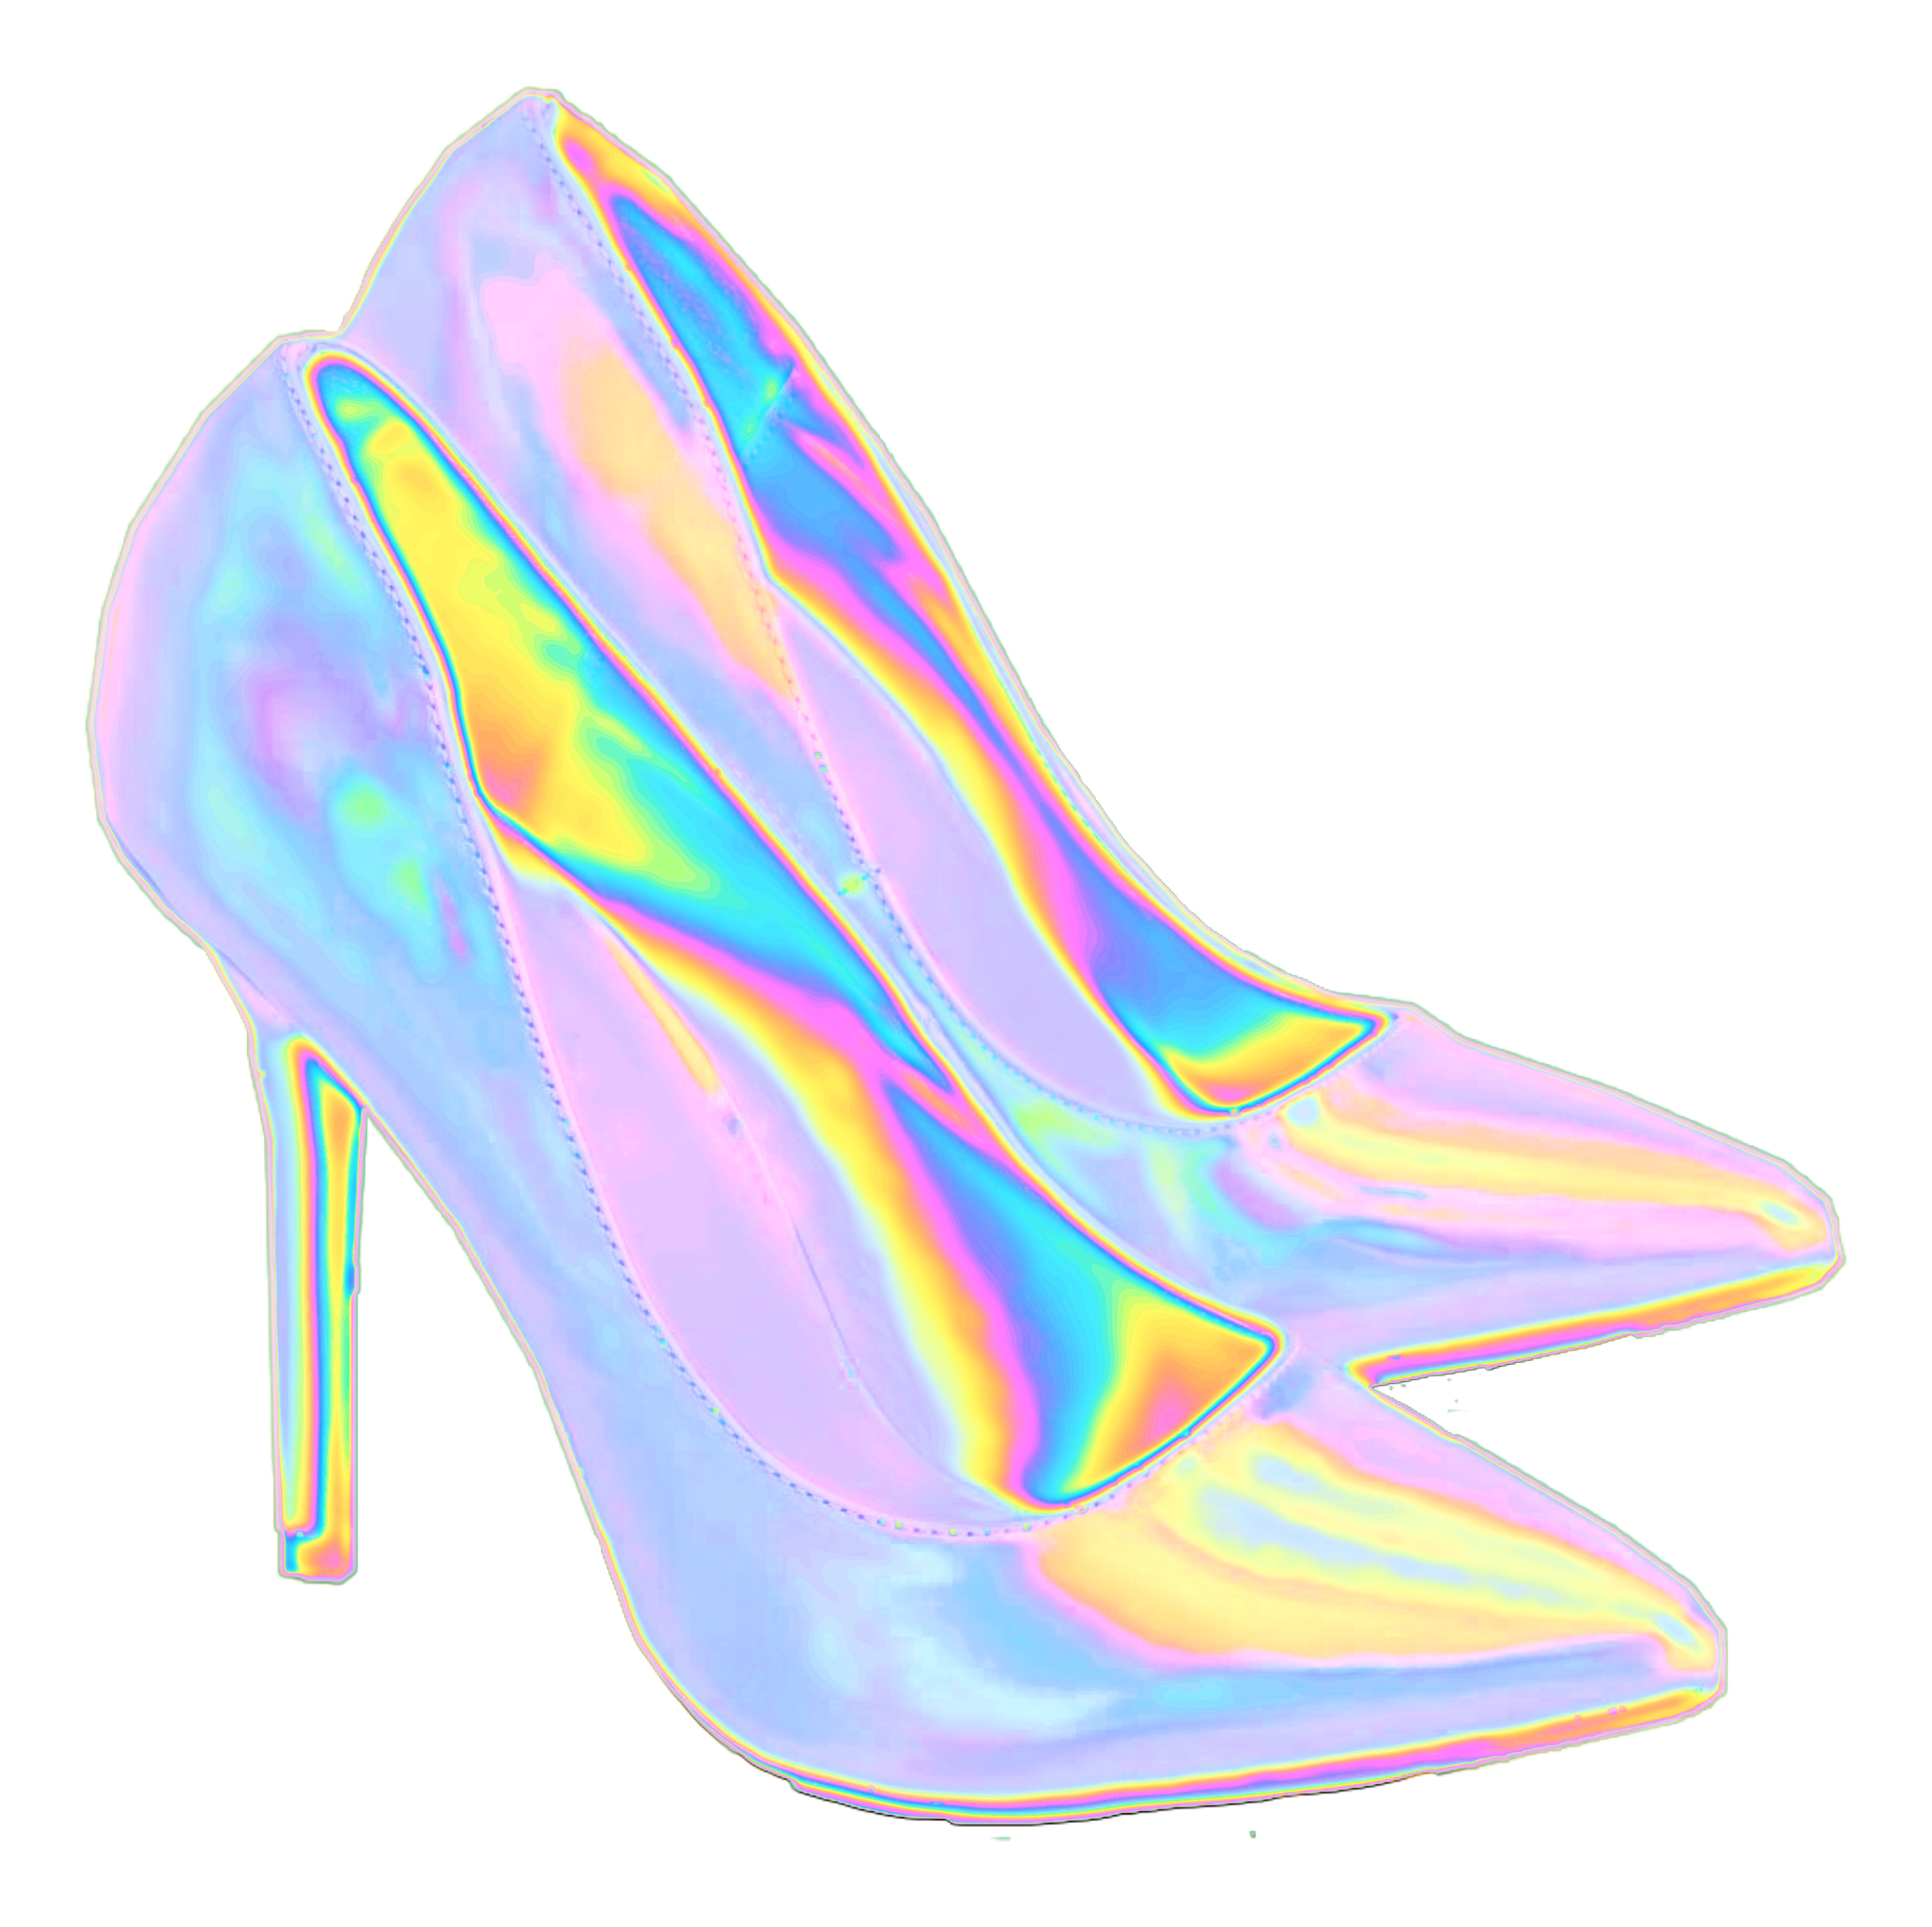 pastel rainbow heels